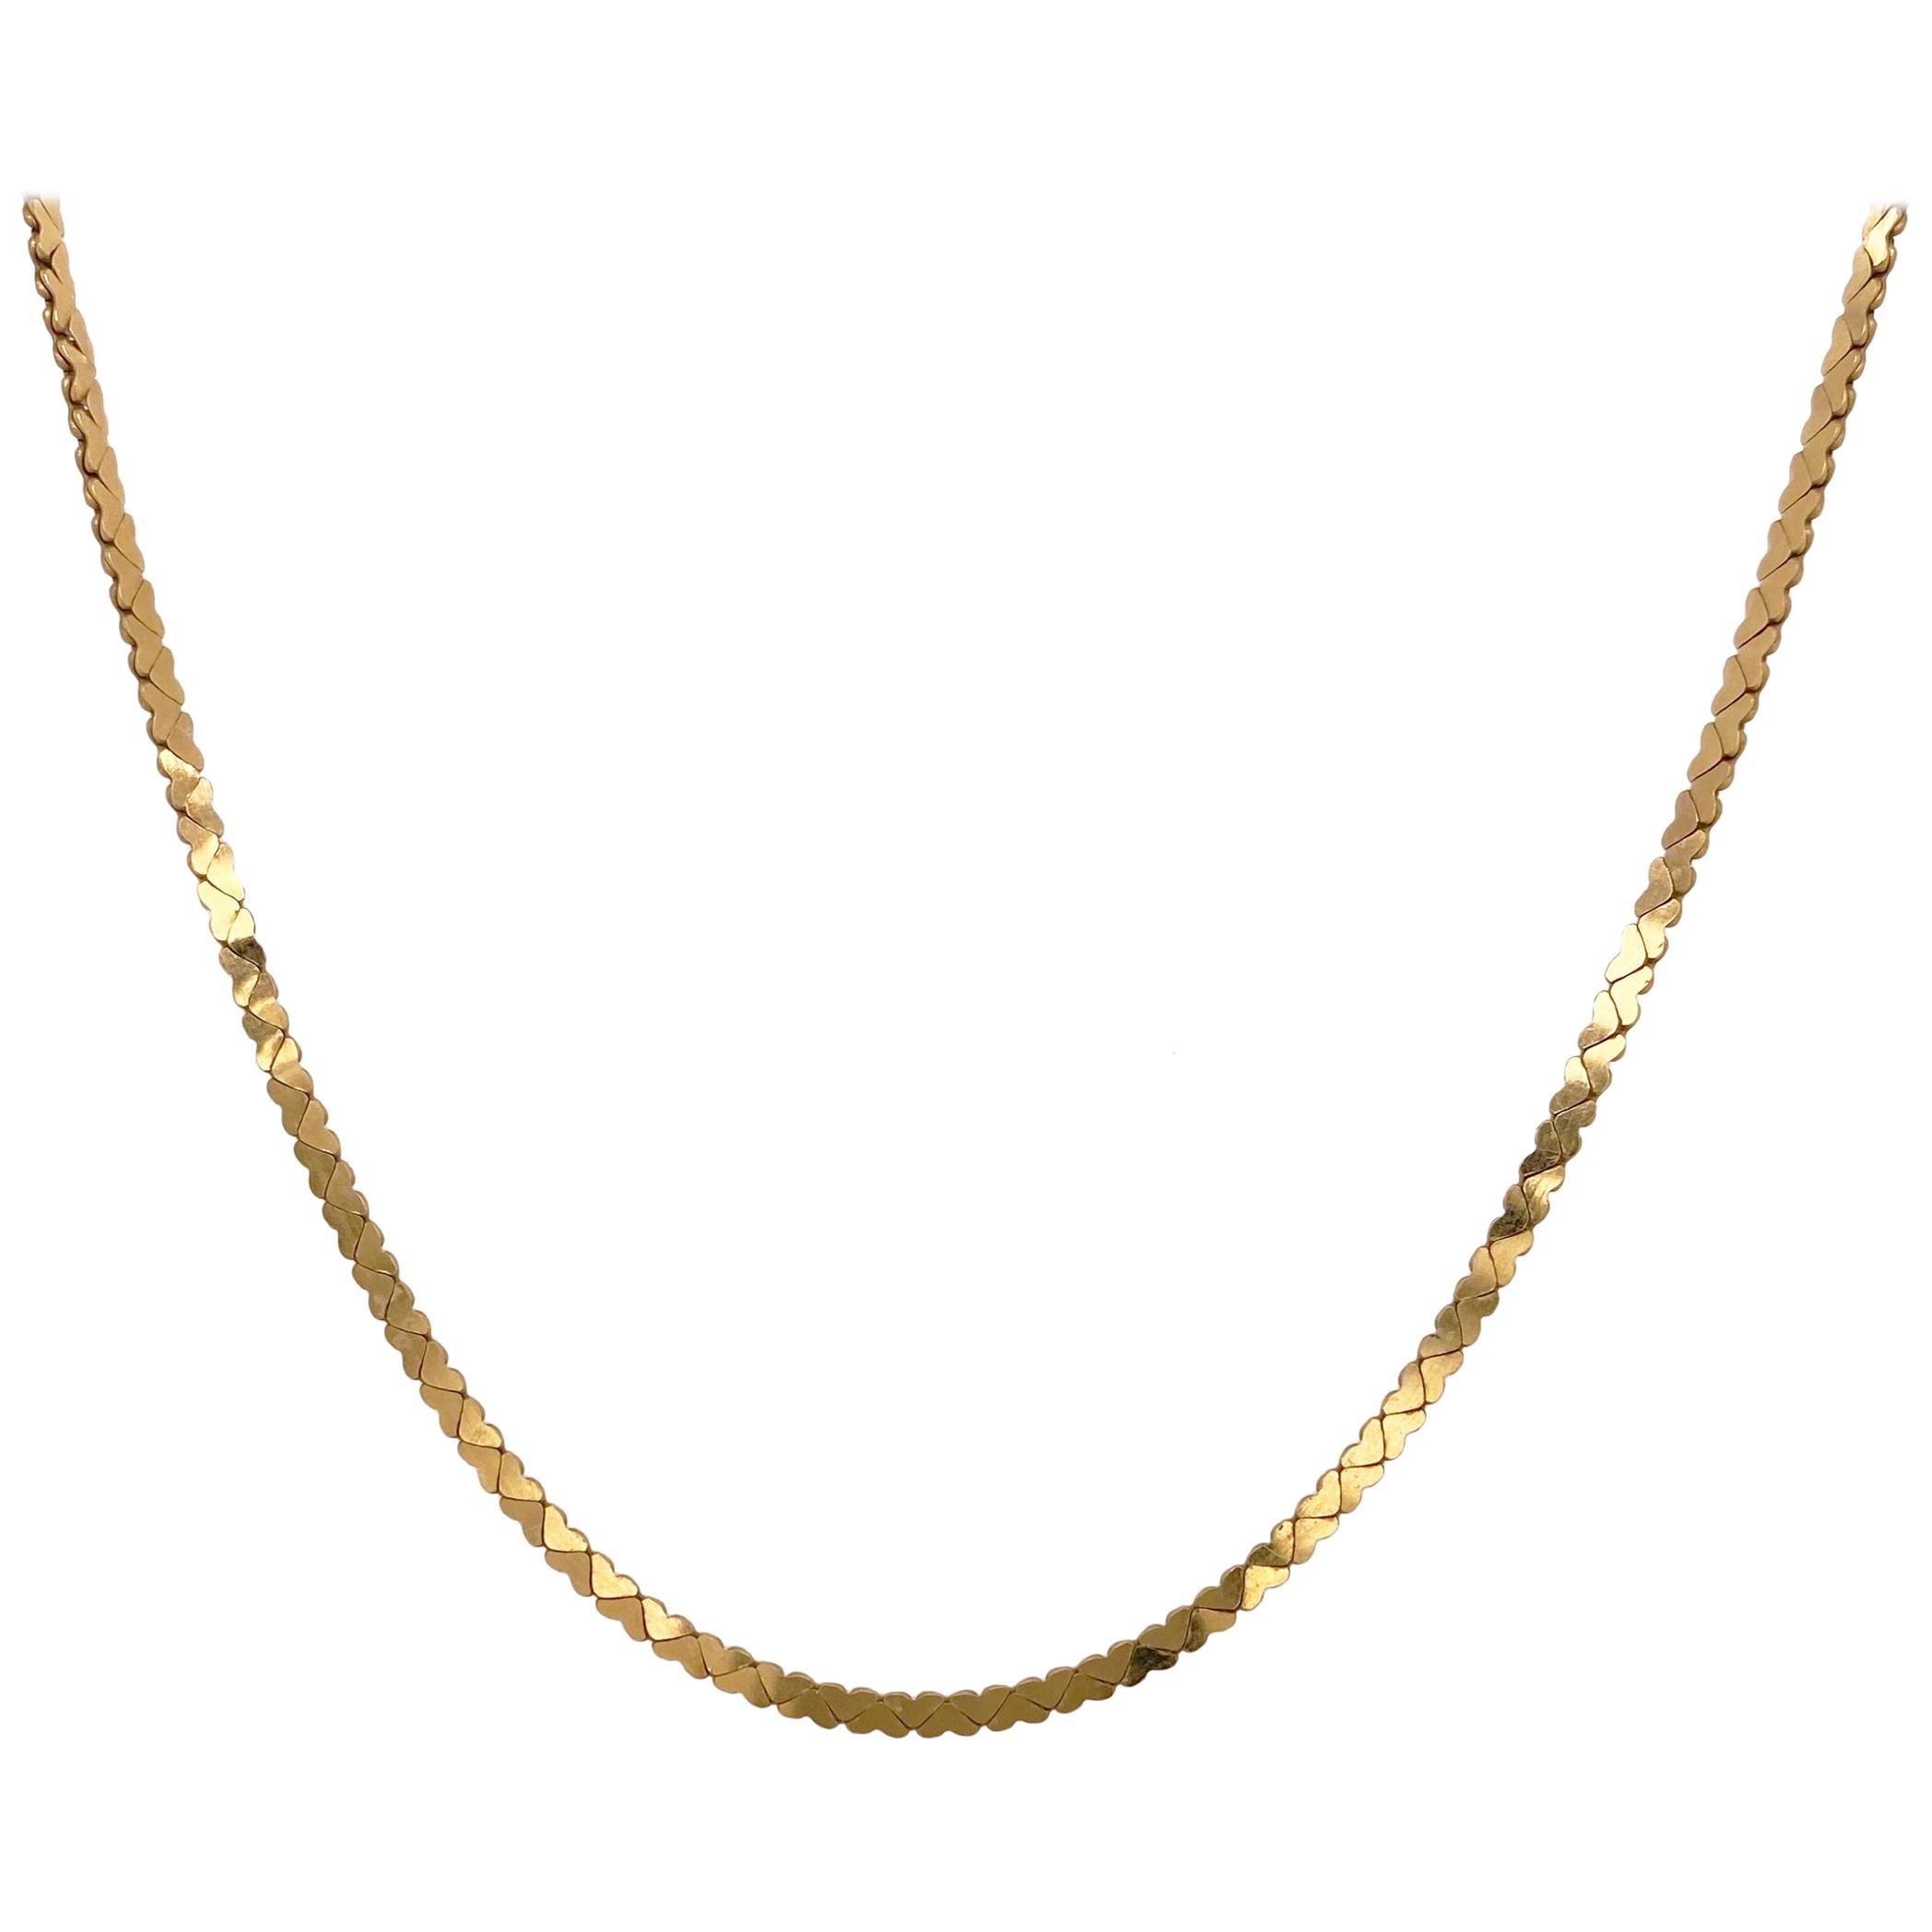 Gold Heart Chain in 14 Karat Yellow Gold, Flat Link